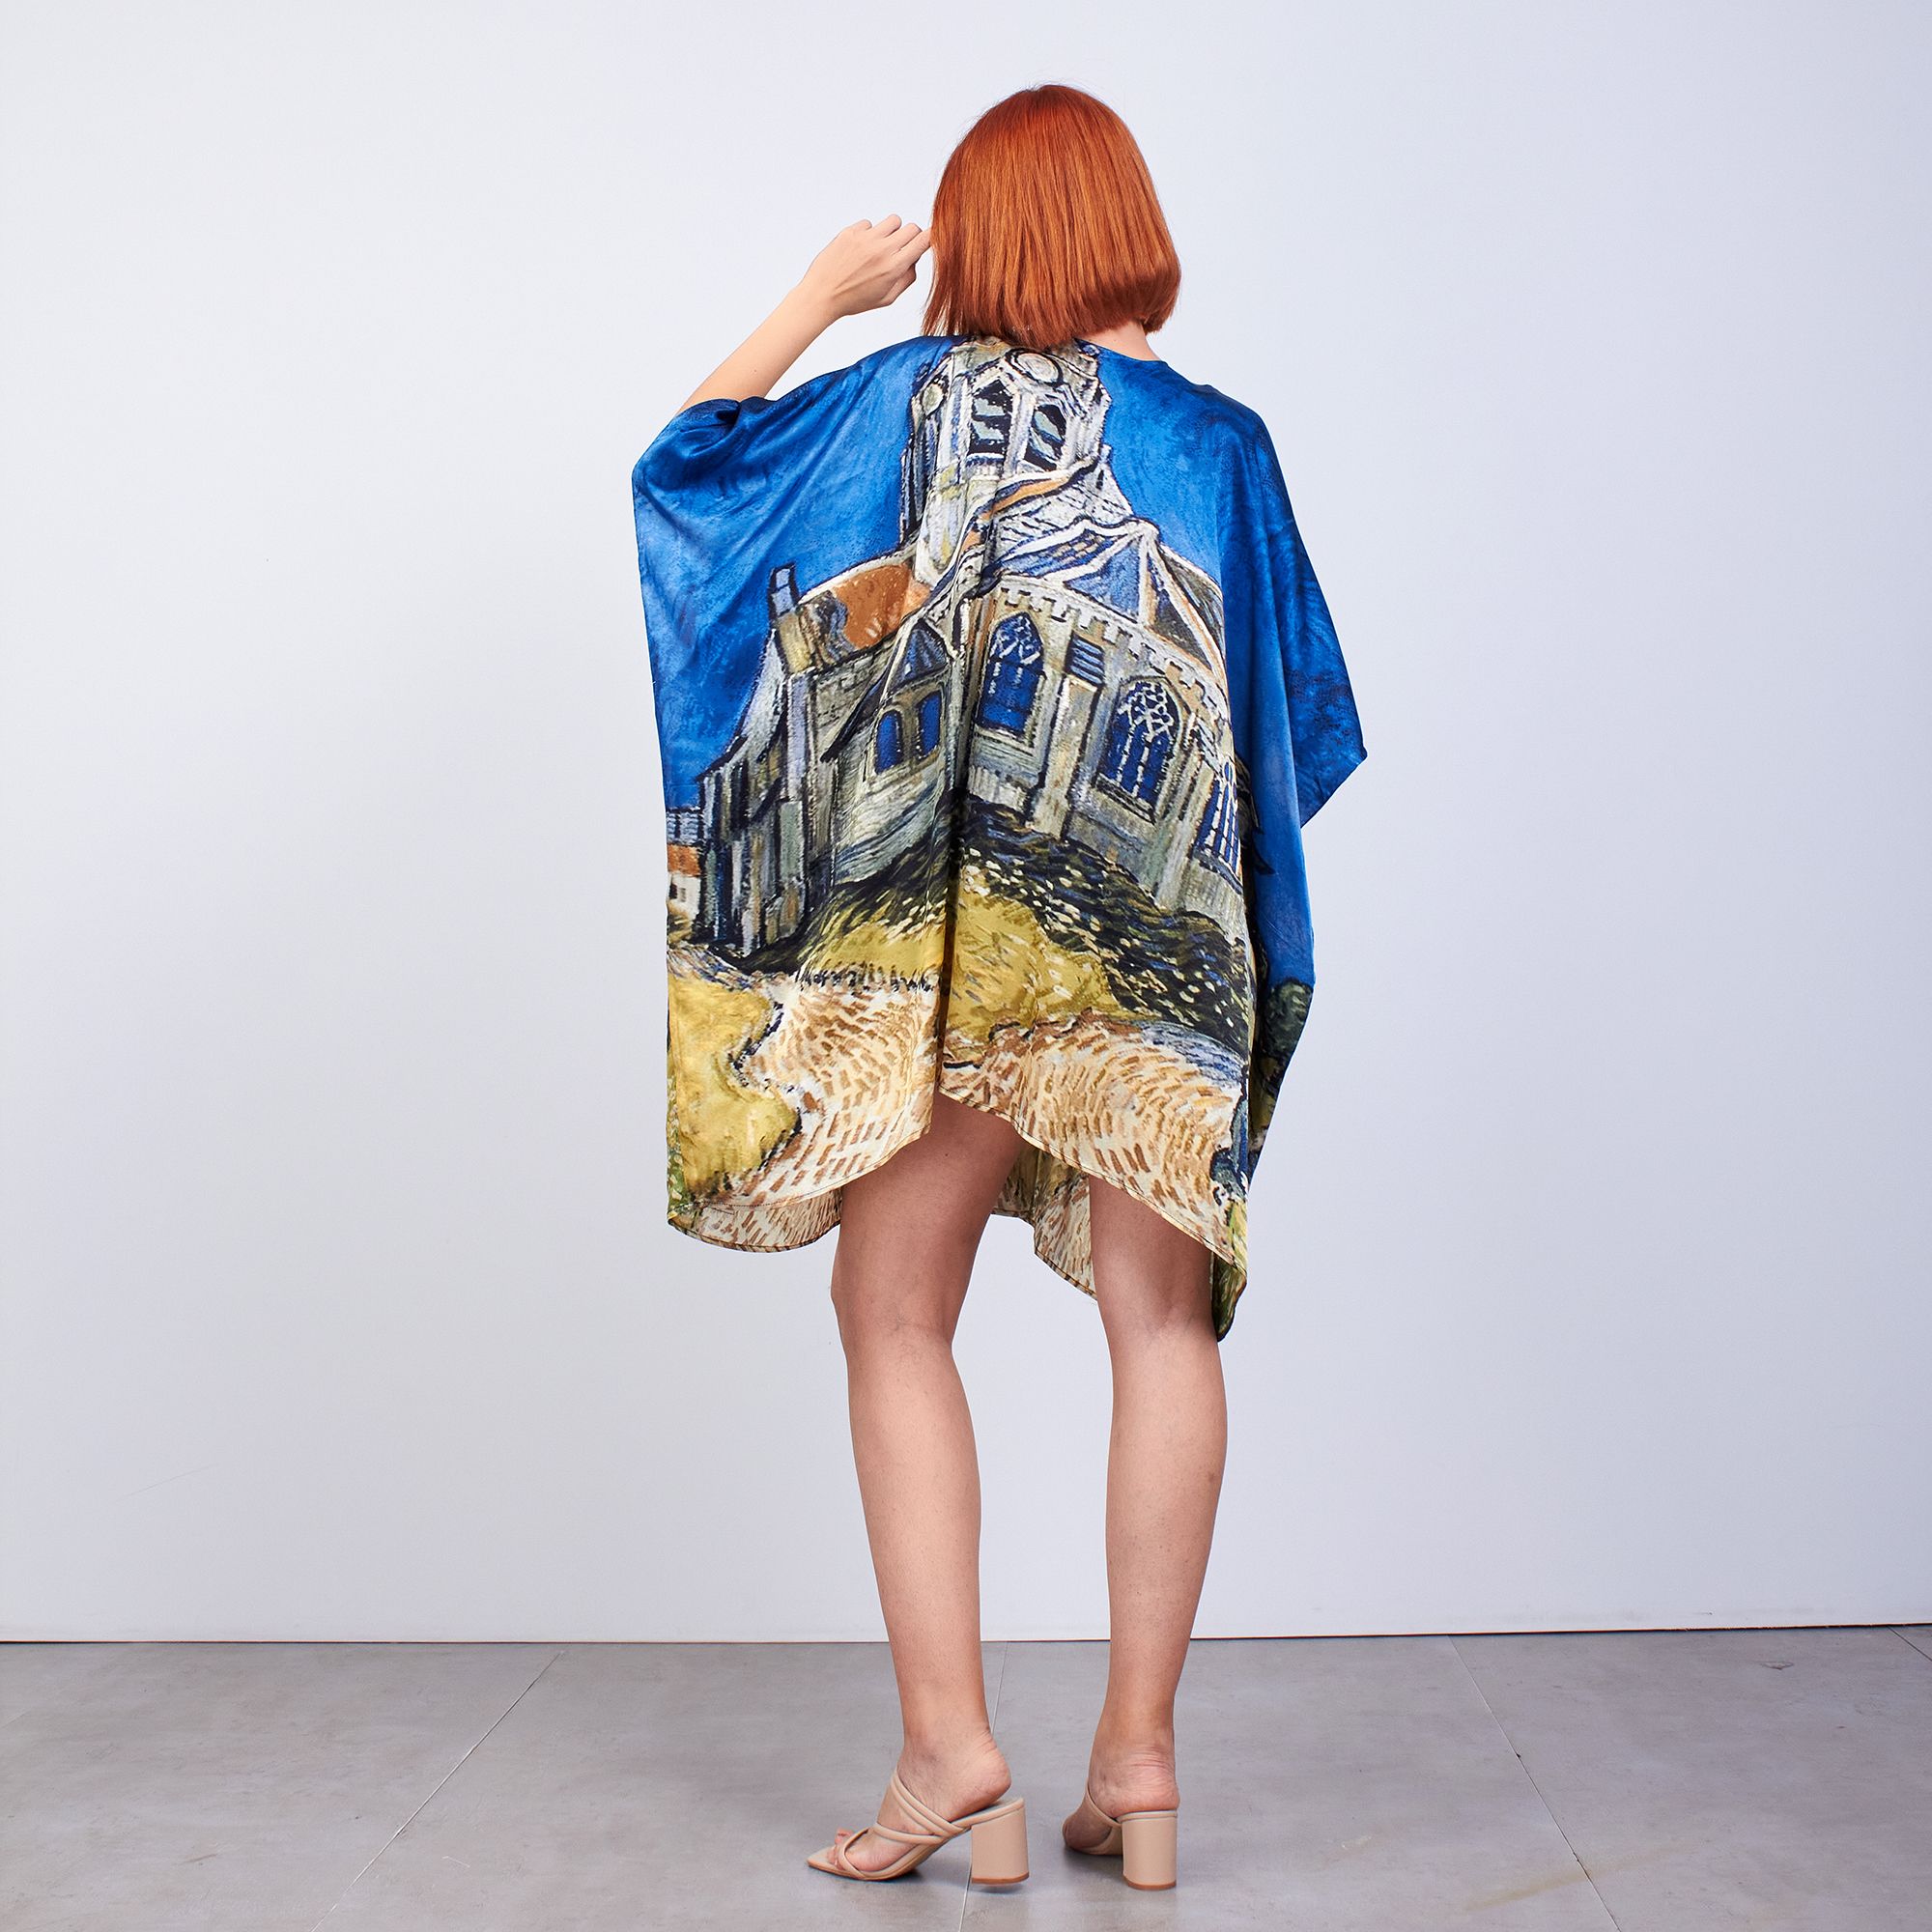 ألبسة كيمونو حريري ١٠٠٪؜ قصير "وشاح للشاطئ" | Van Gogh Church at Auvers